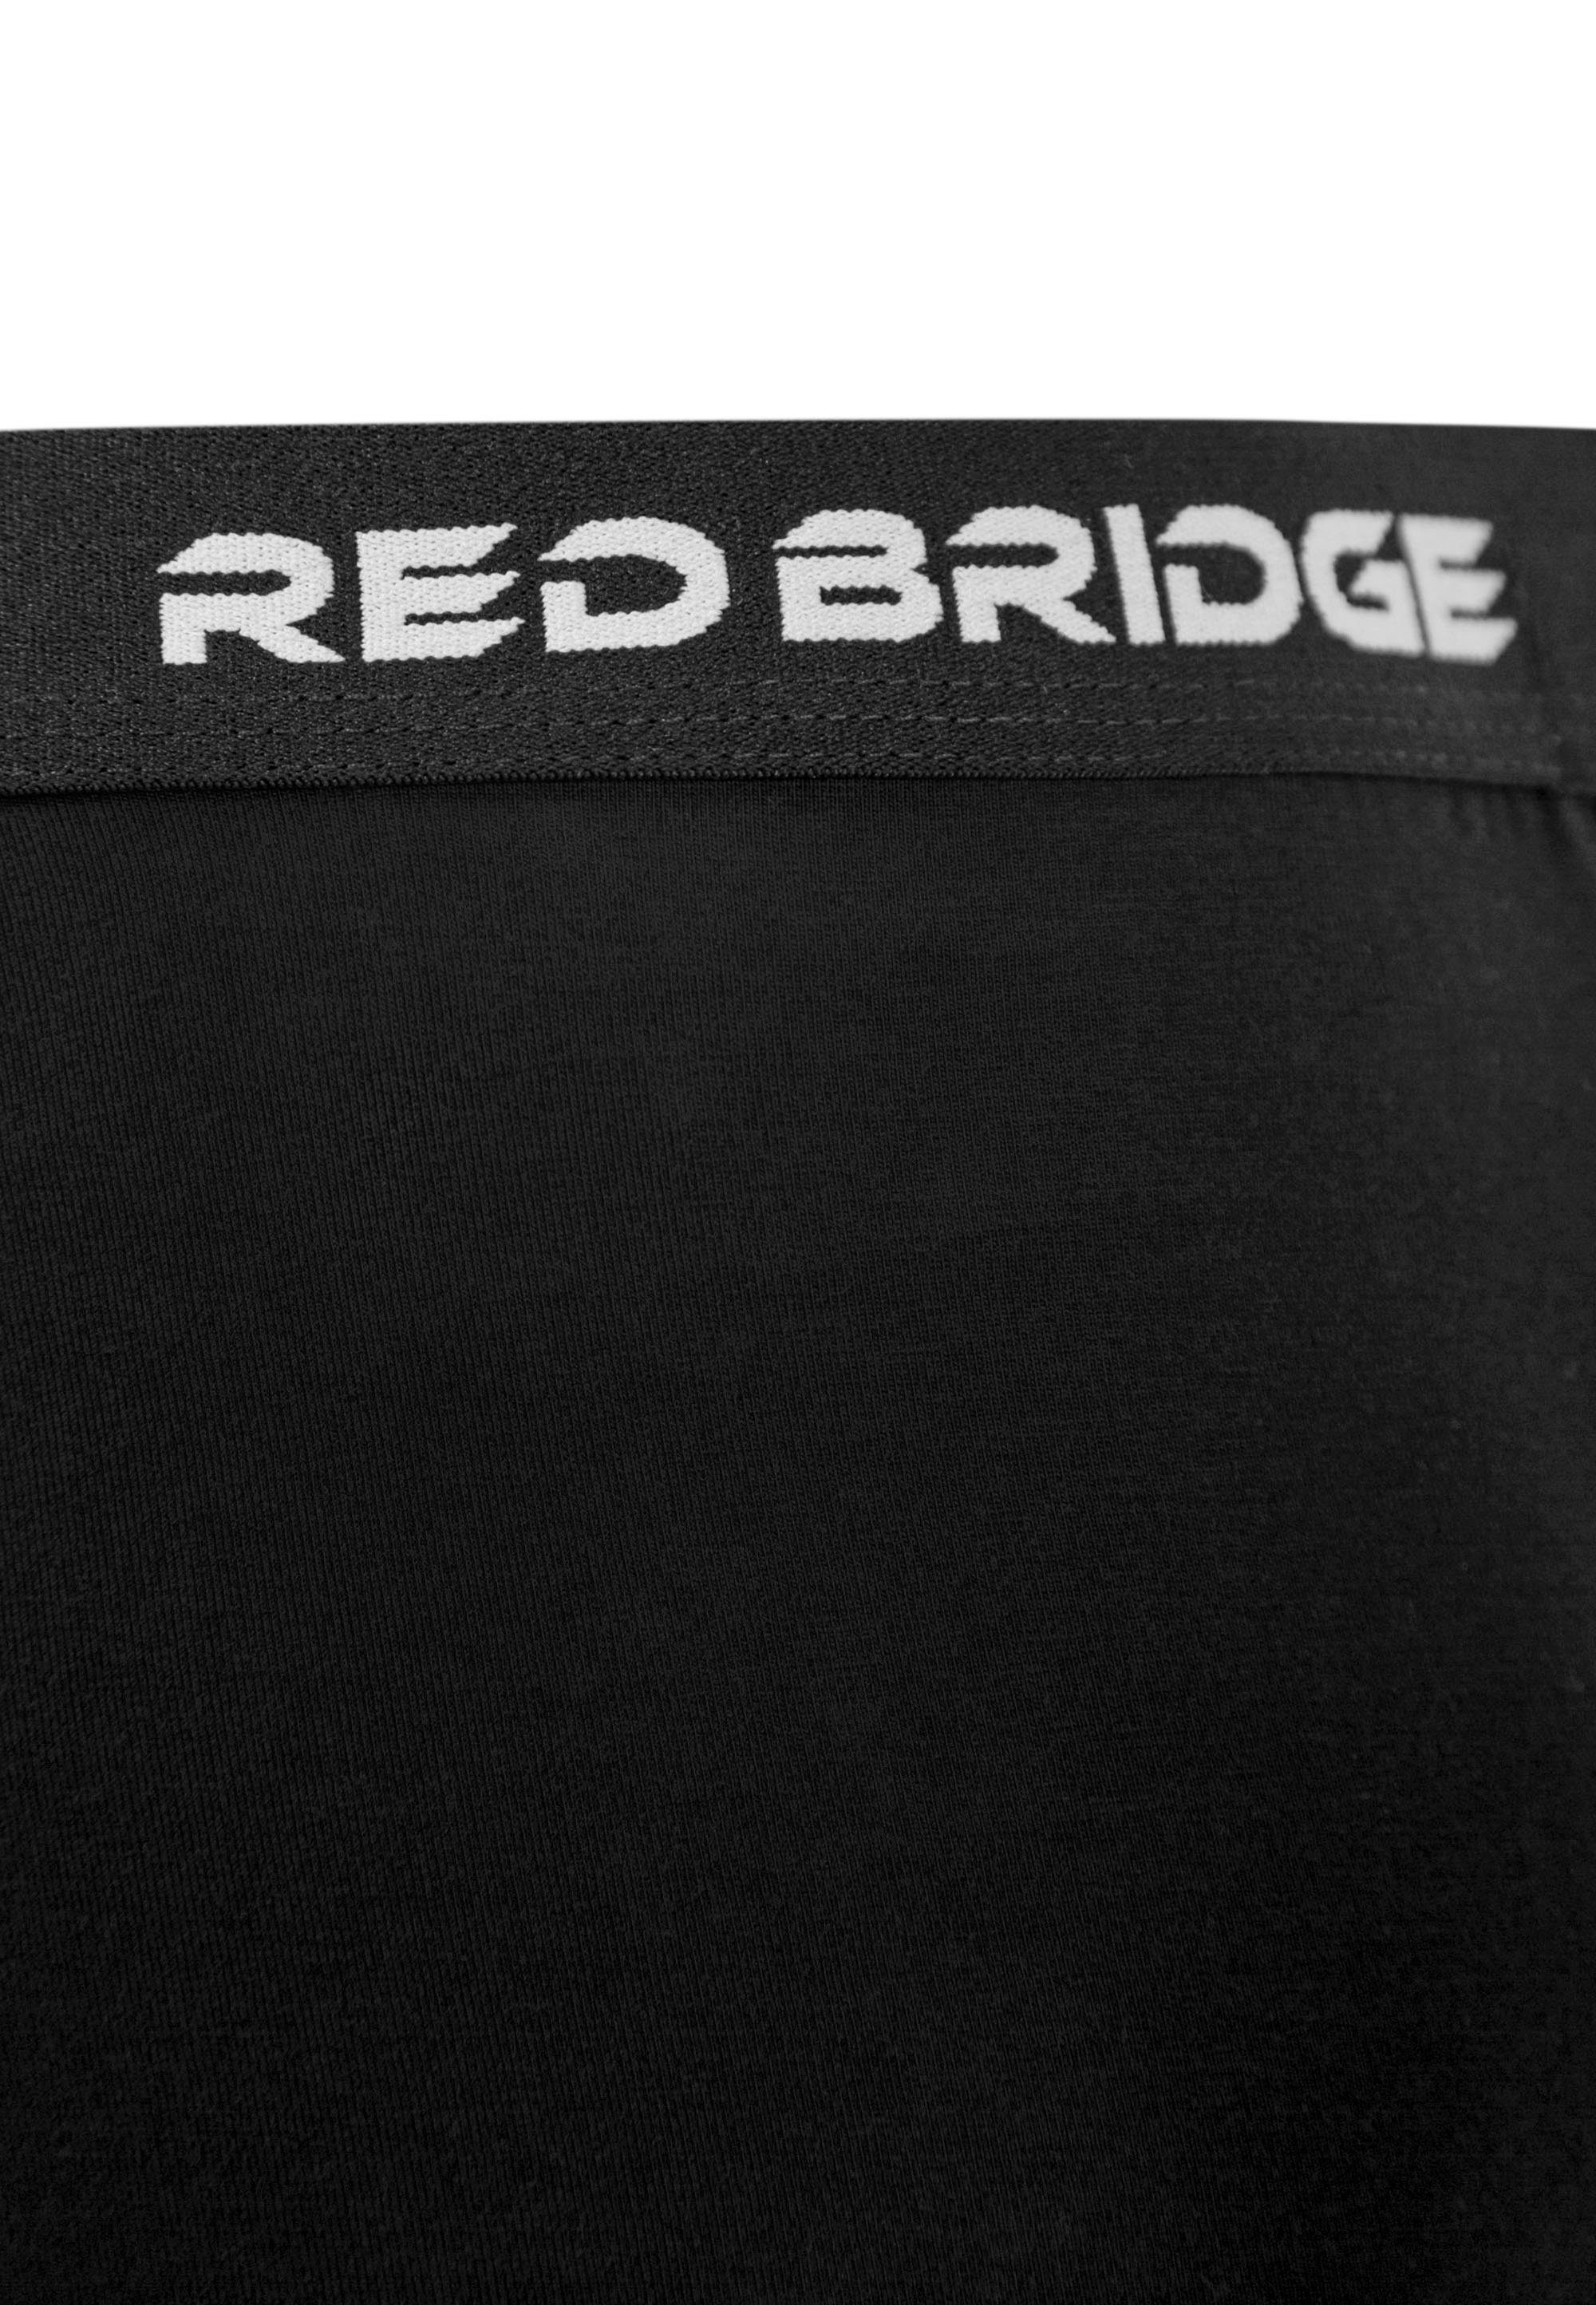 (10-St) Logobund schwarz Boxershorts Bangor trendigem RedBridge mit